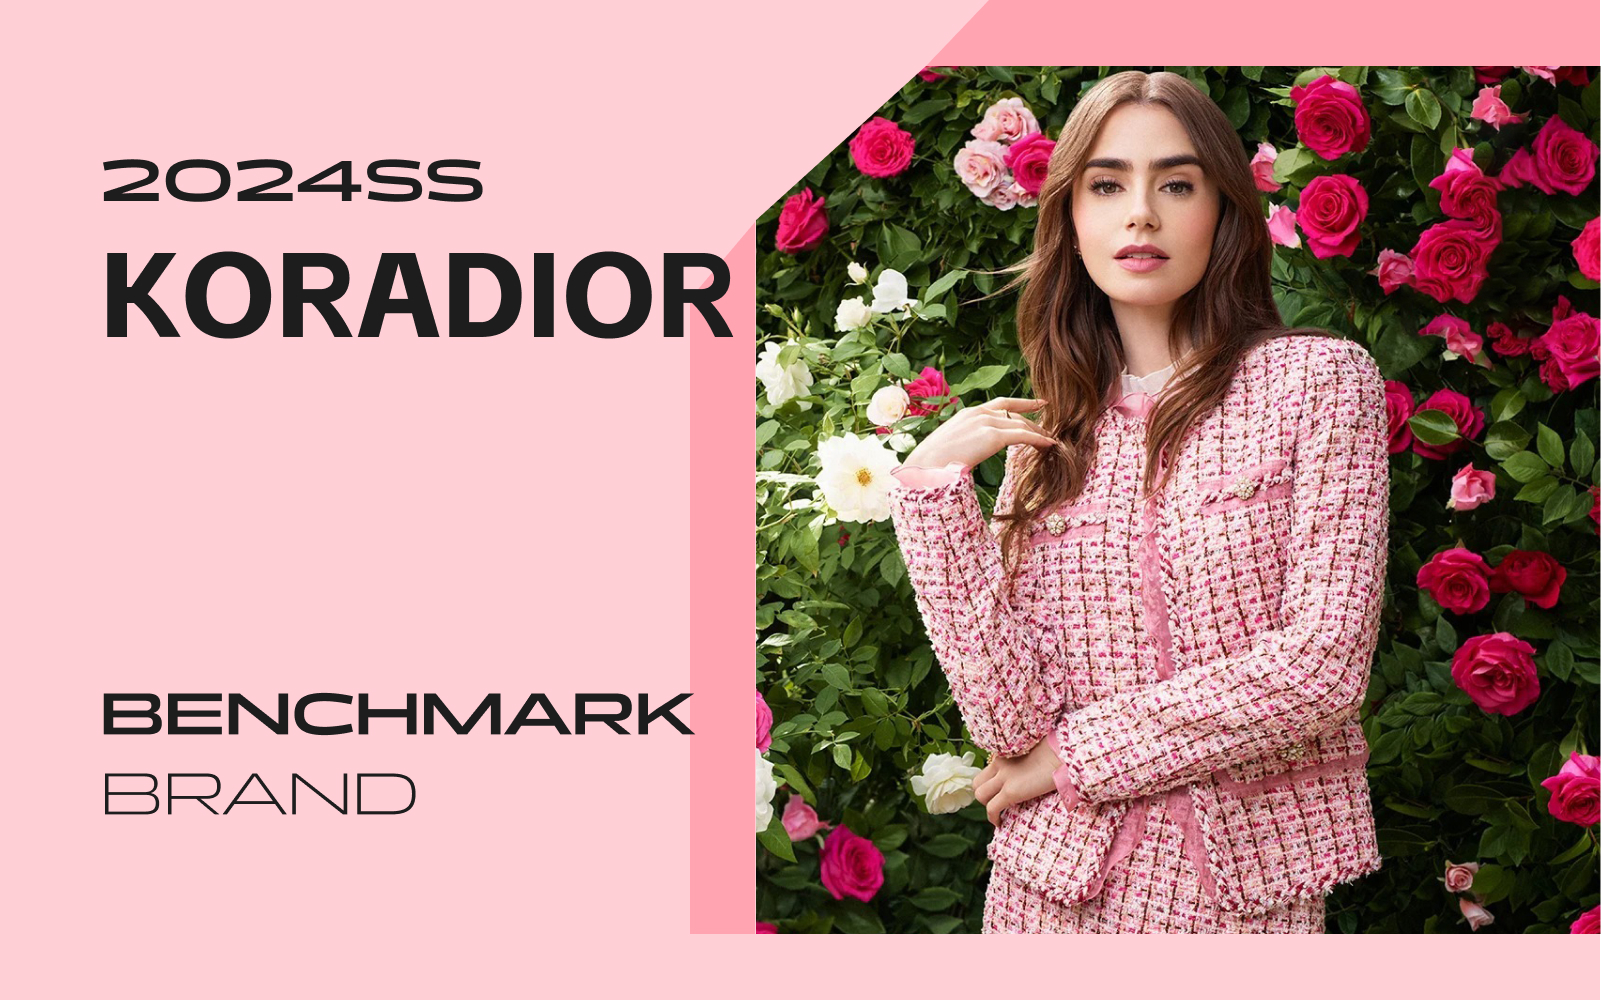 Dressing Rose -- The Analysis of Koradior The Womenswear Benchmark Brand